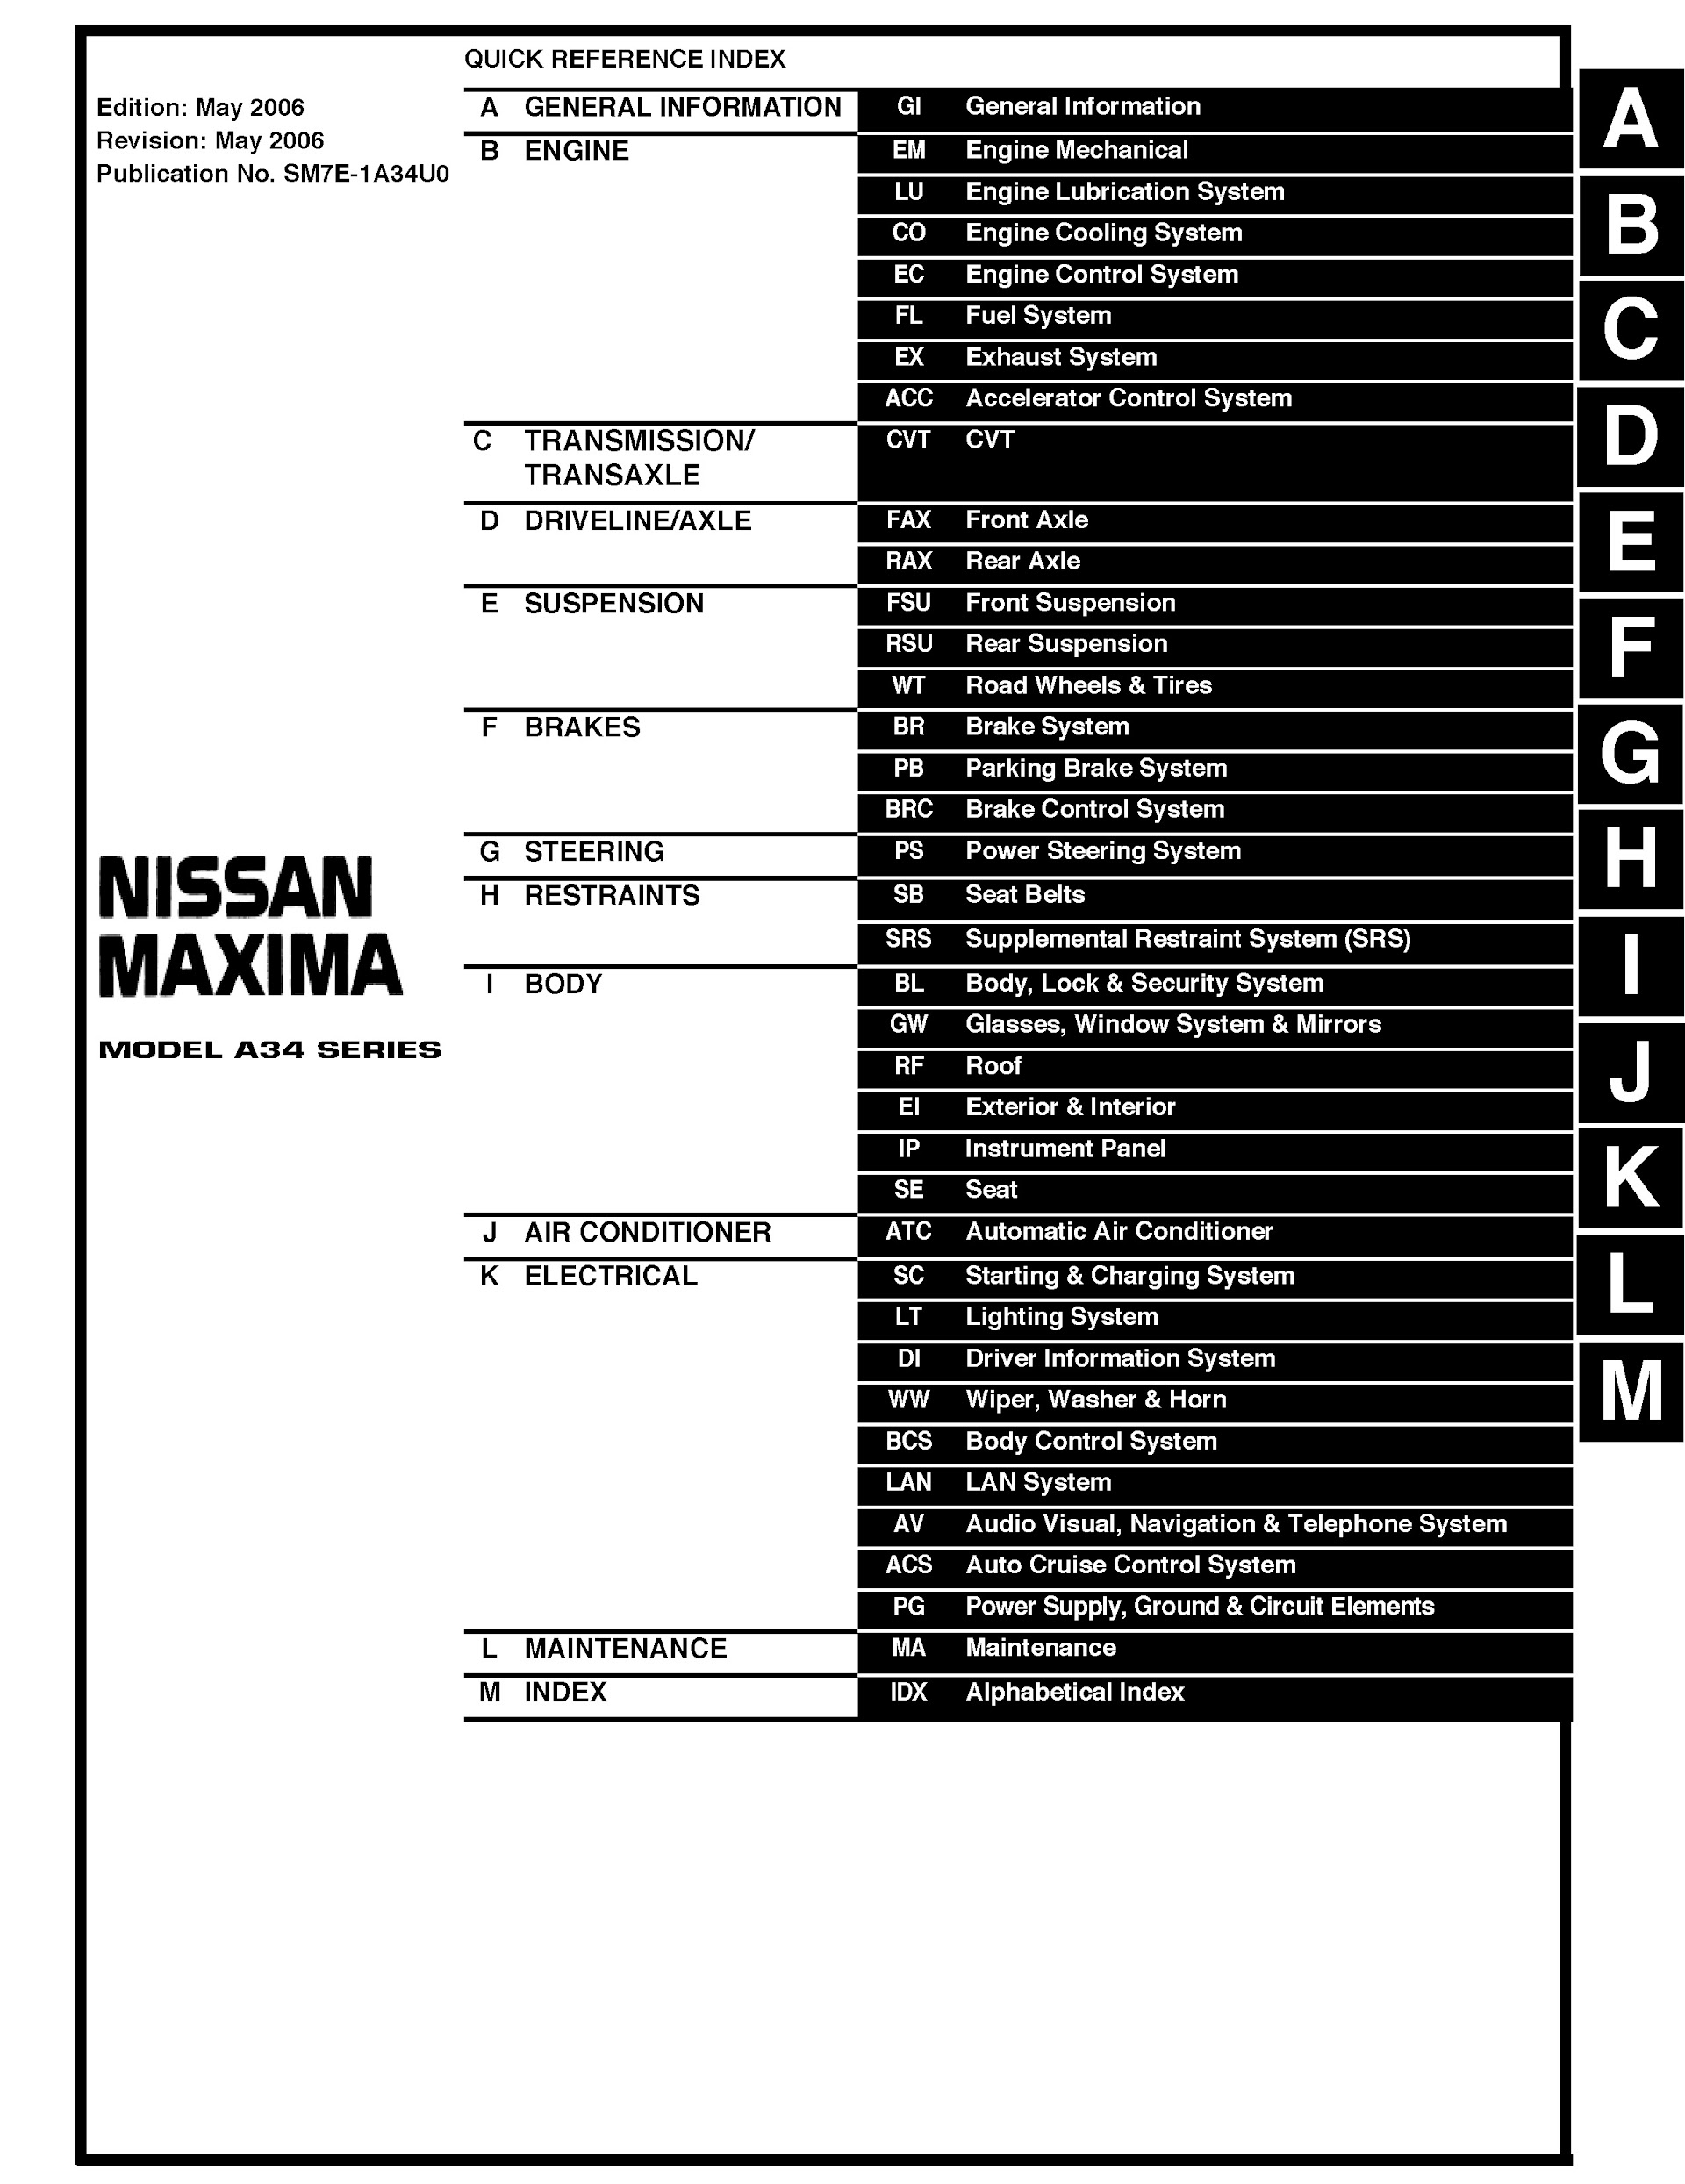 table of contents 2007 Nissan Maxima Repair Manual